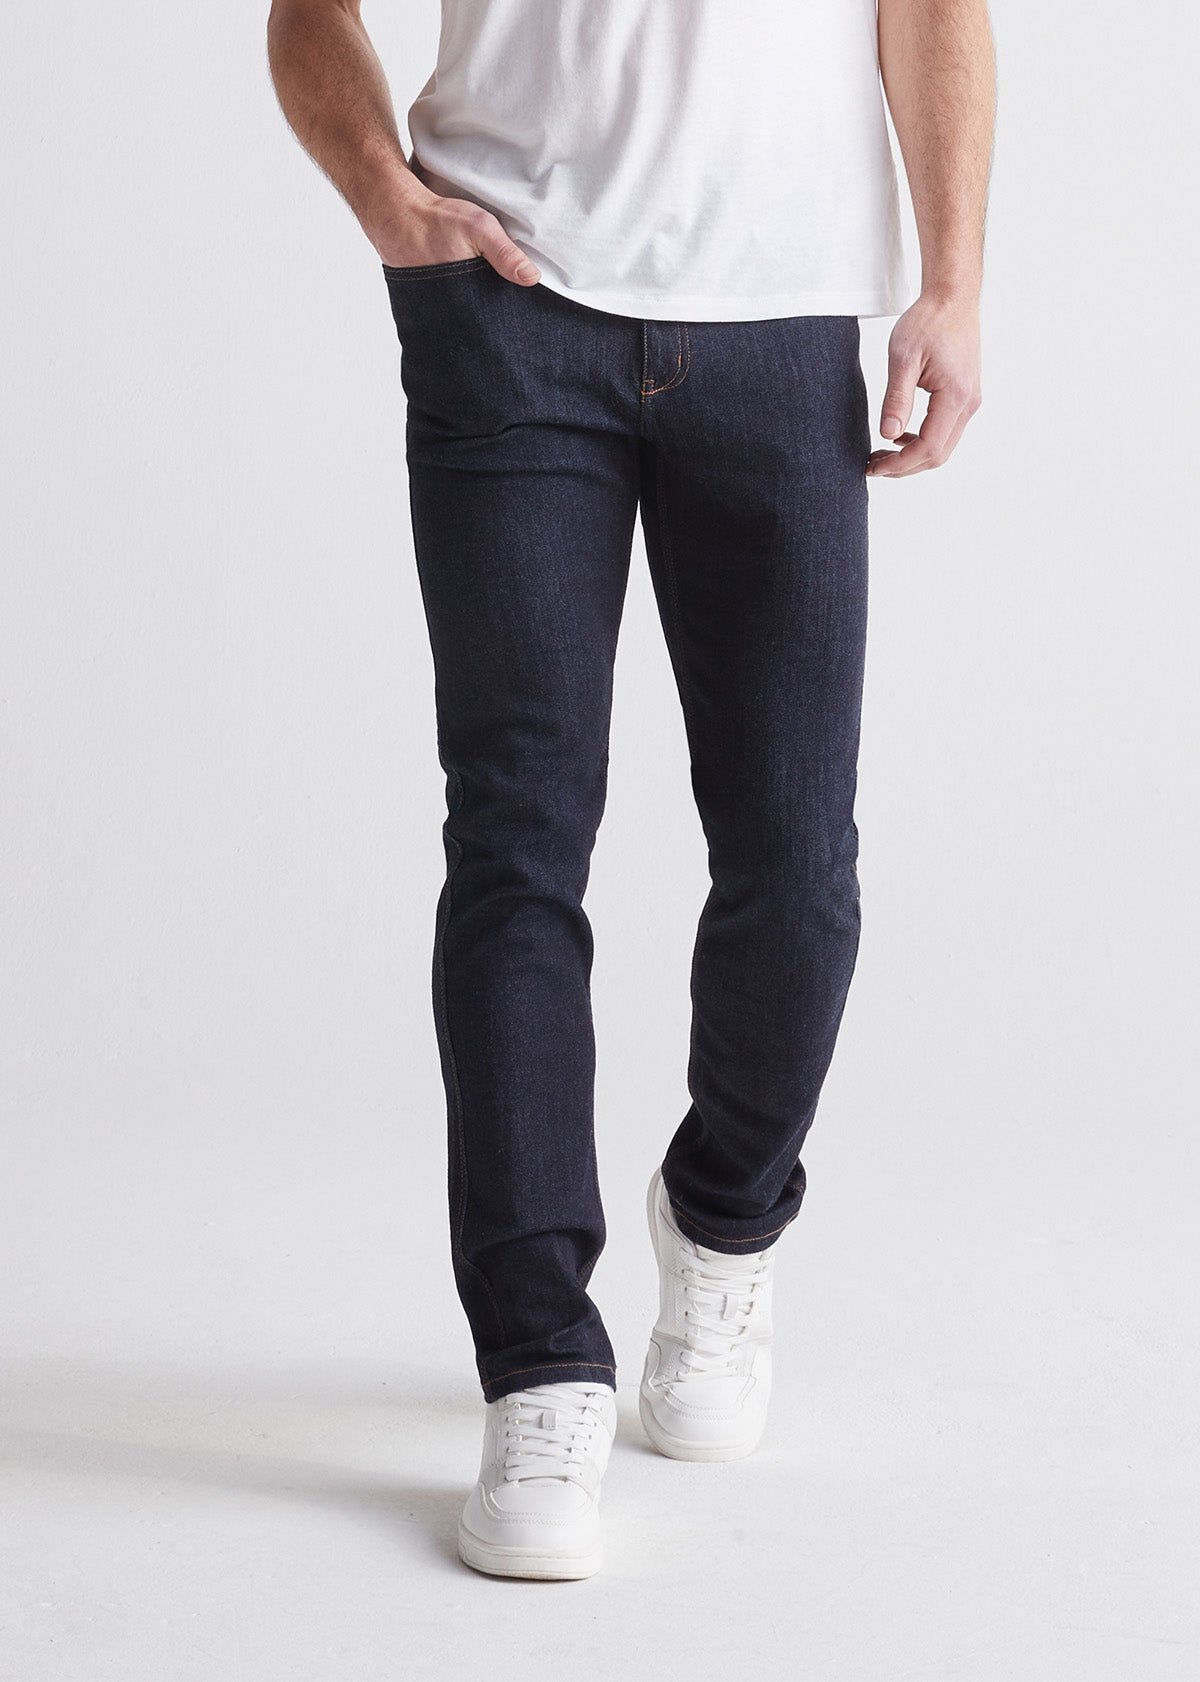 mens dark blue slim fit stretch jeans front